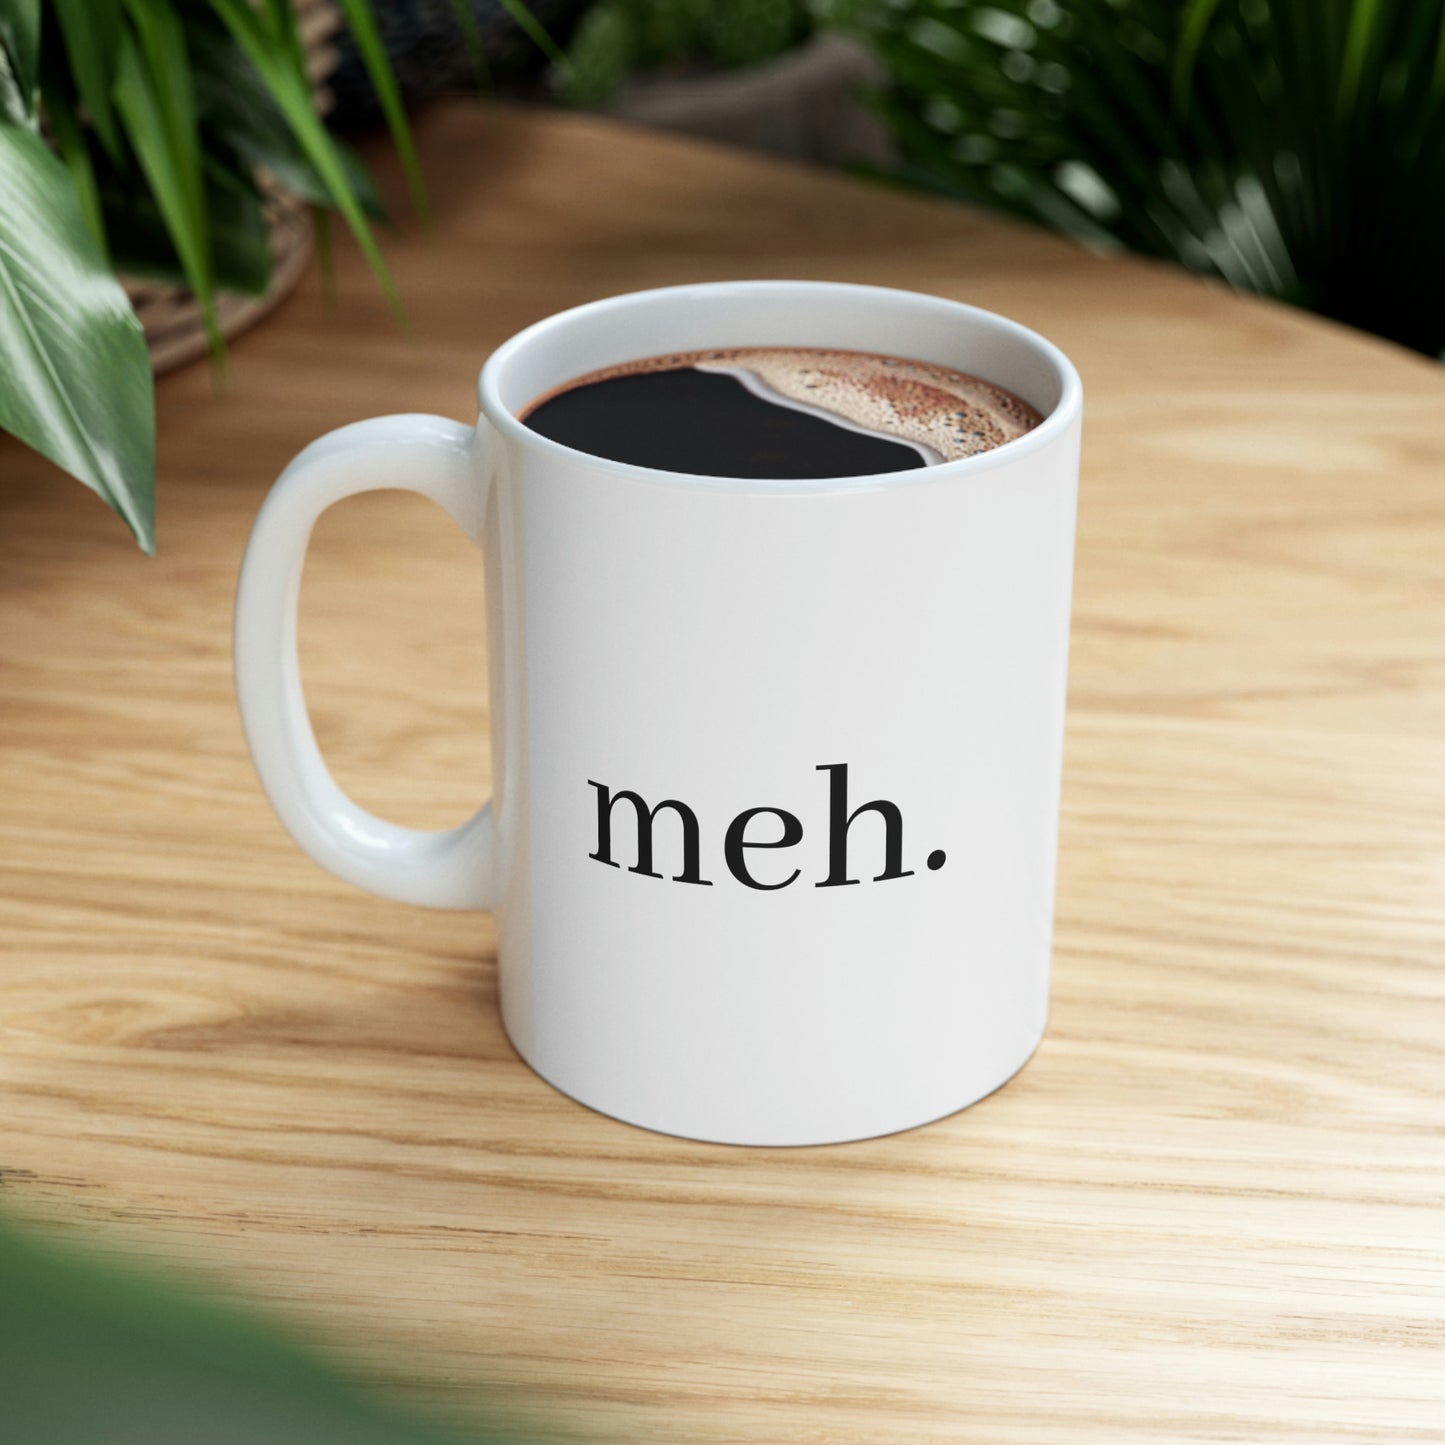 Meh. Mug